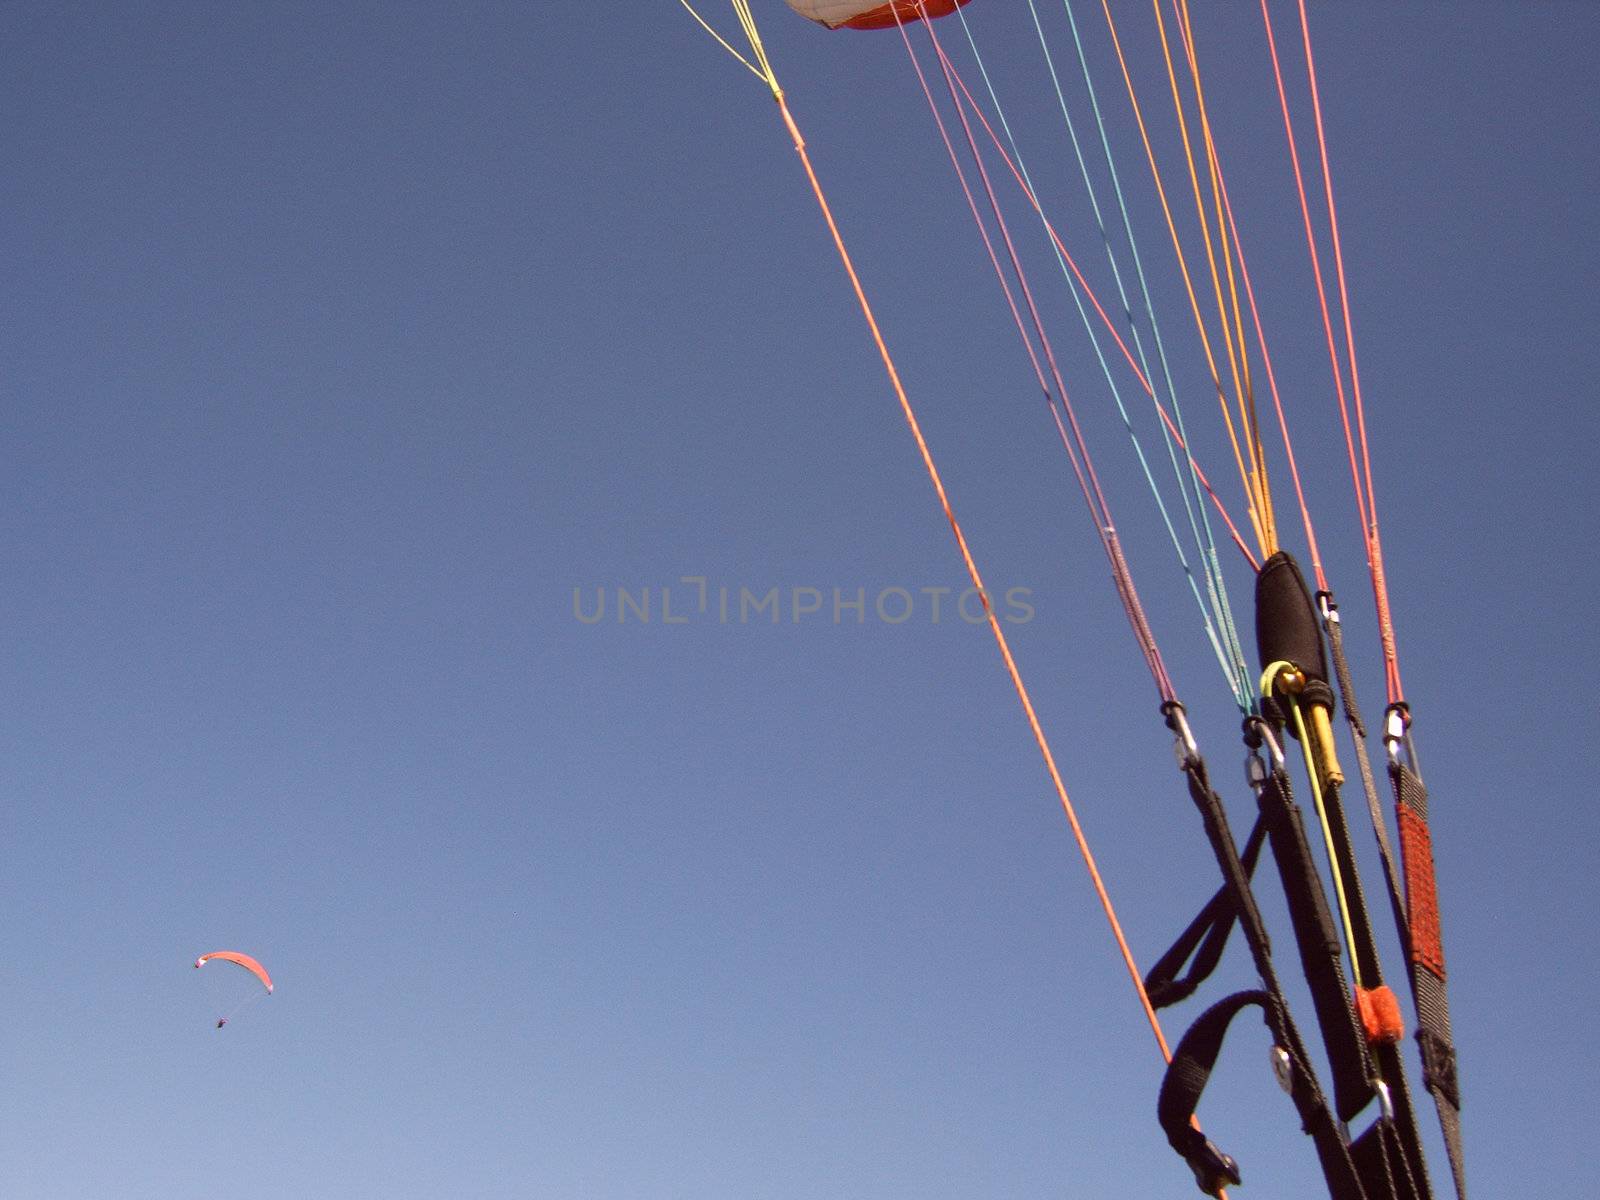 sky with paragliding by miradrozdowski